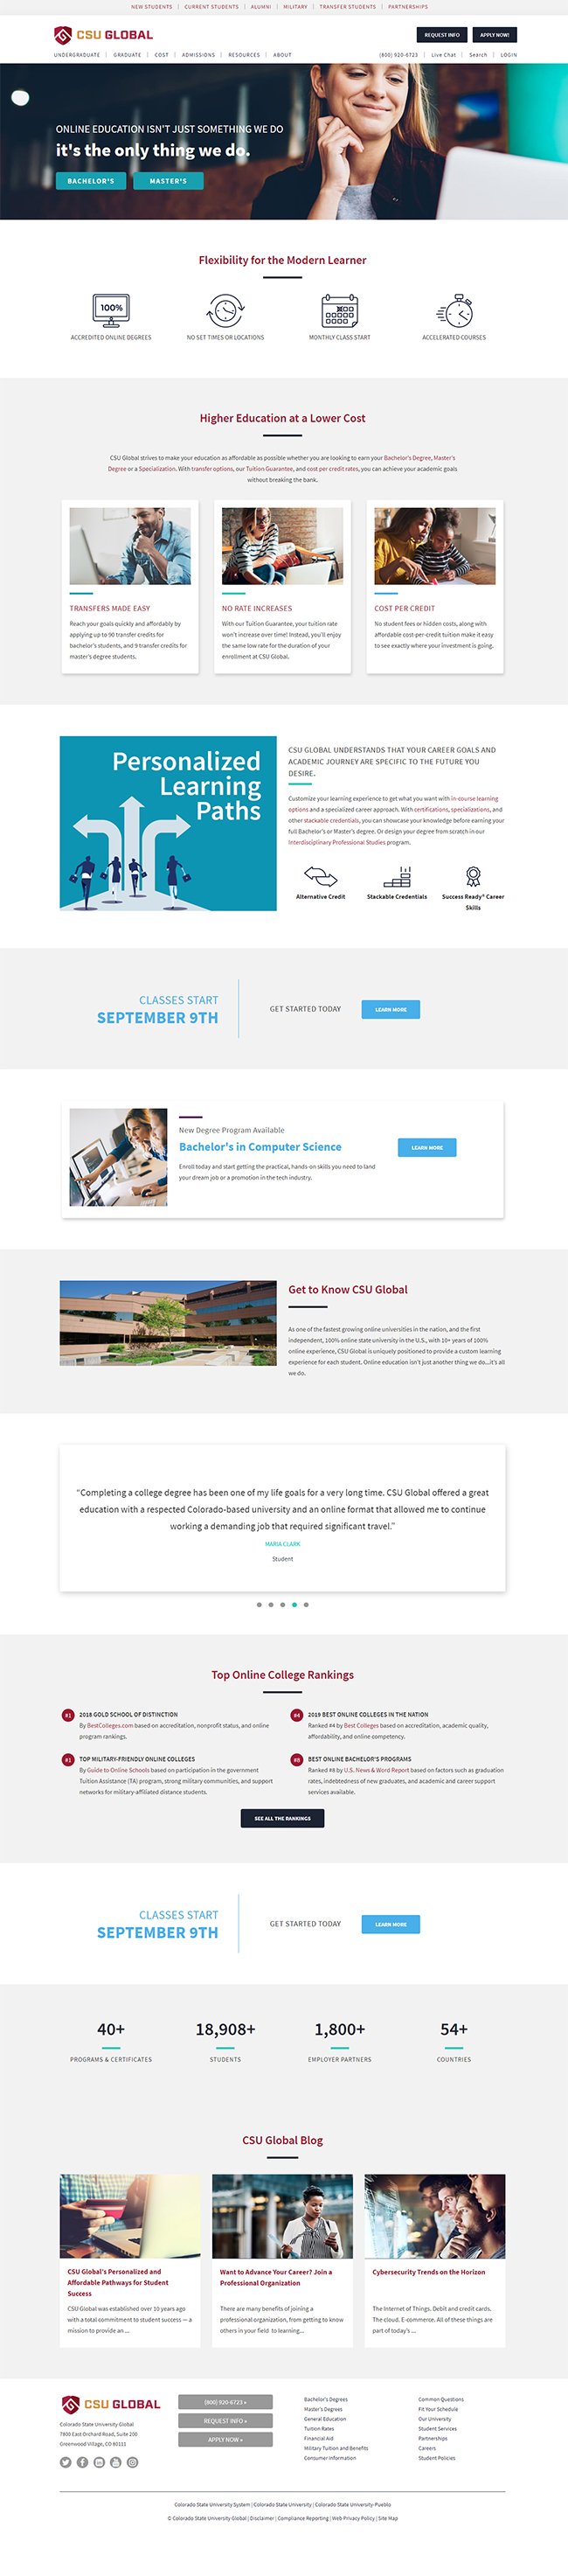 CSU-Global New Homepage